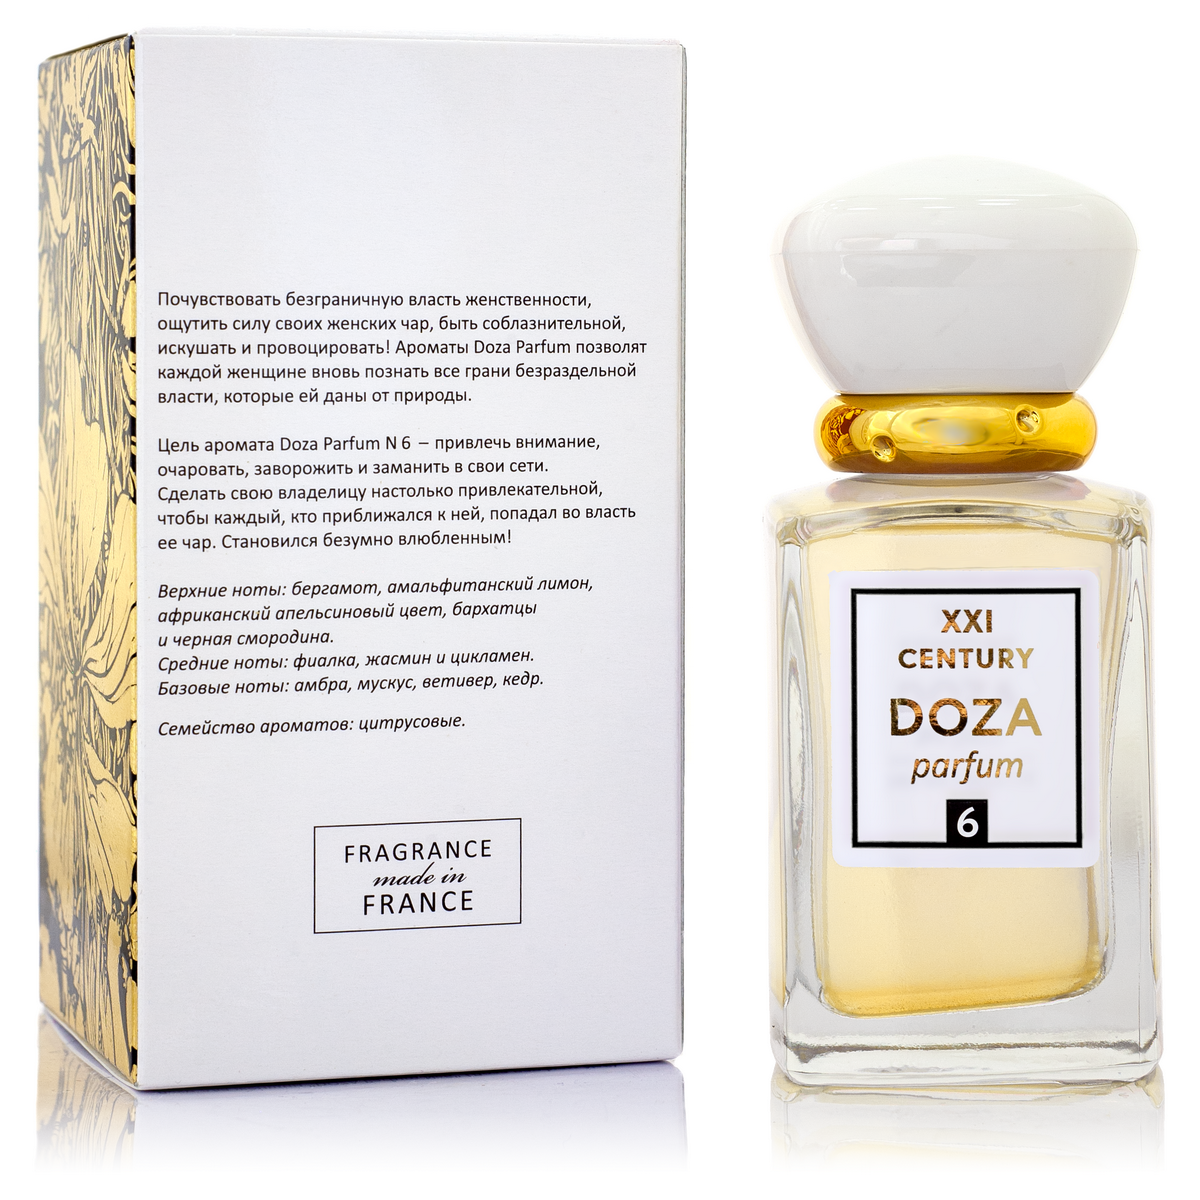 Духи XXI CENTURY DOZA parfum №6 50 мл - фото 3